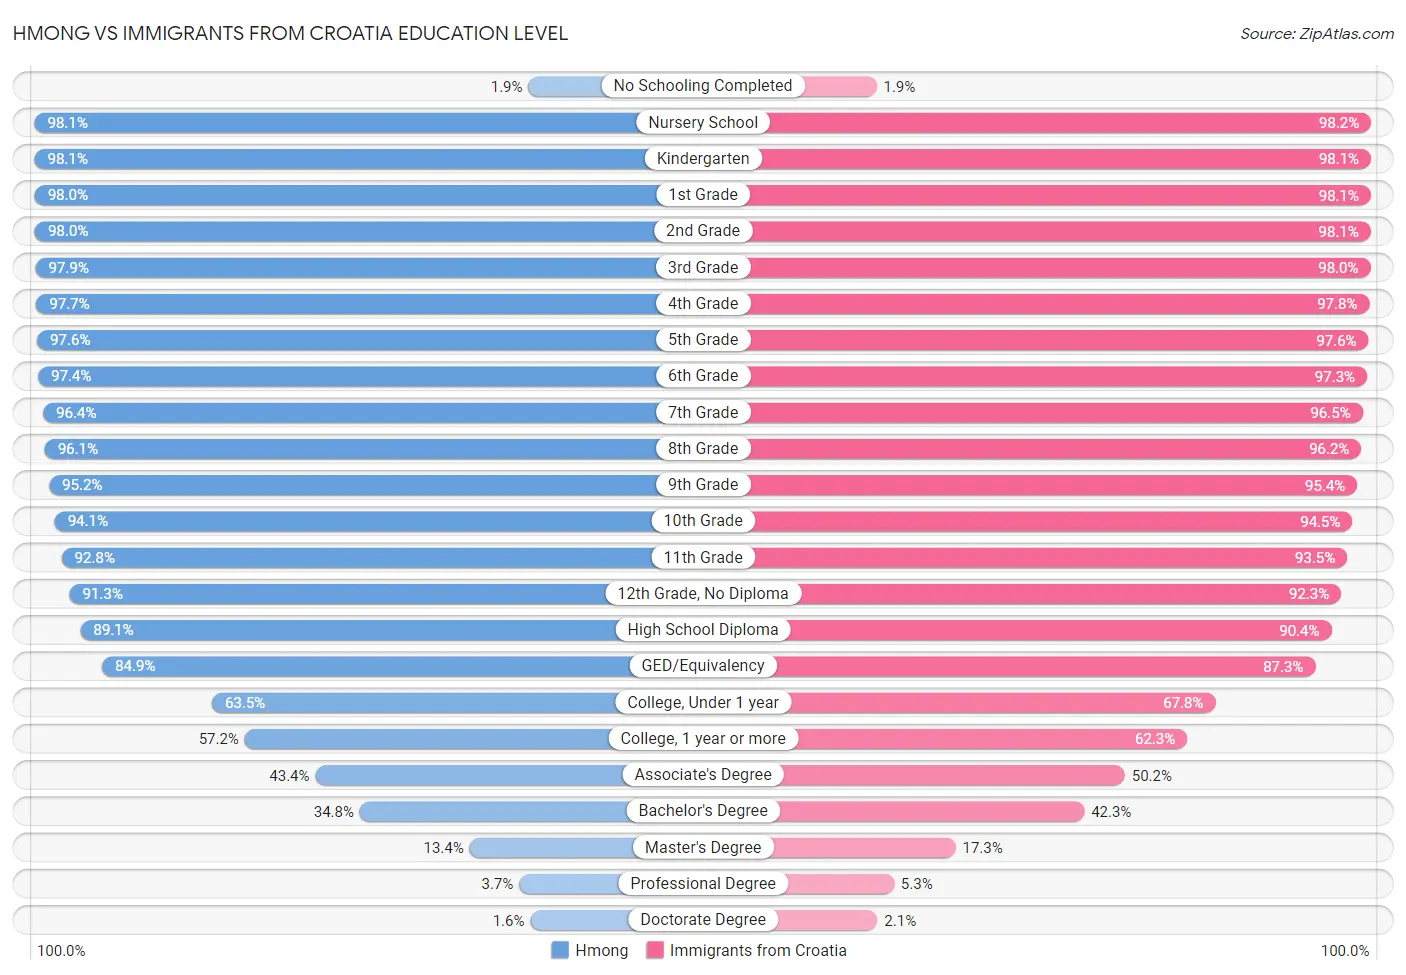 Hmong vs Immigrants from Croatia Education Level